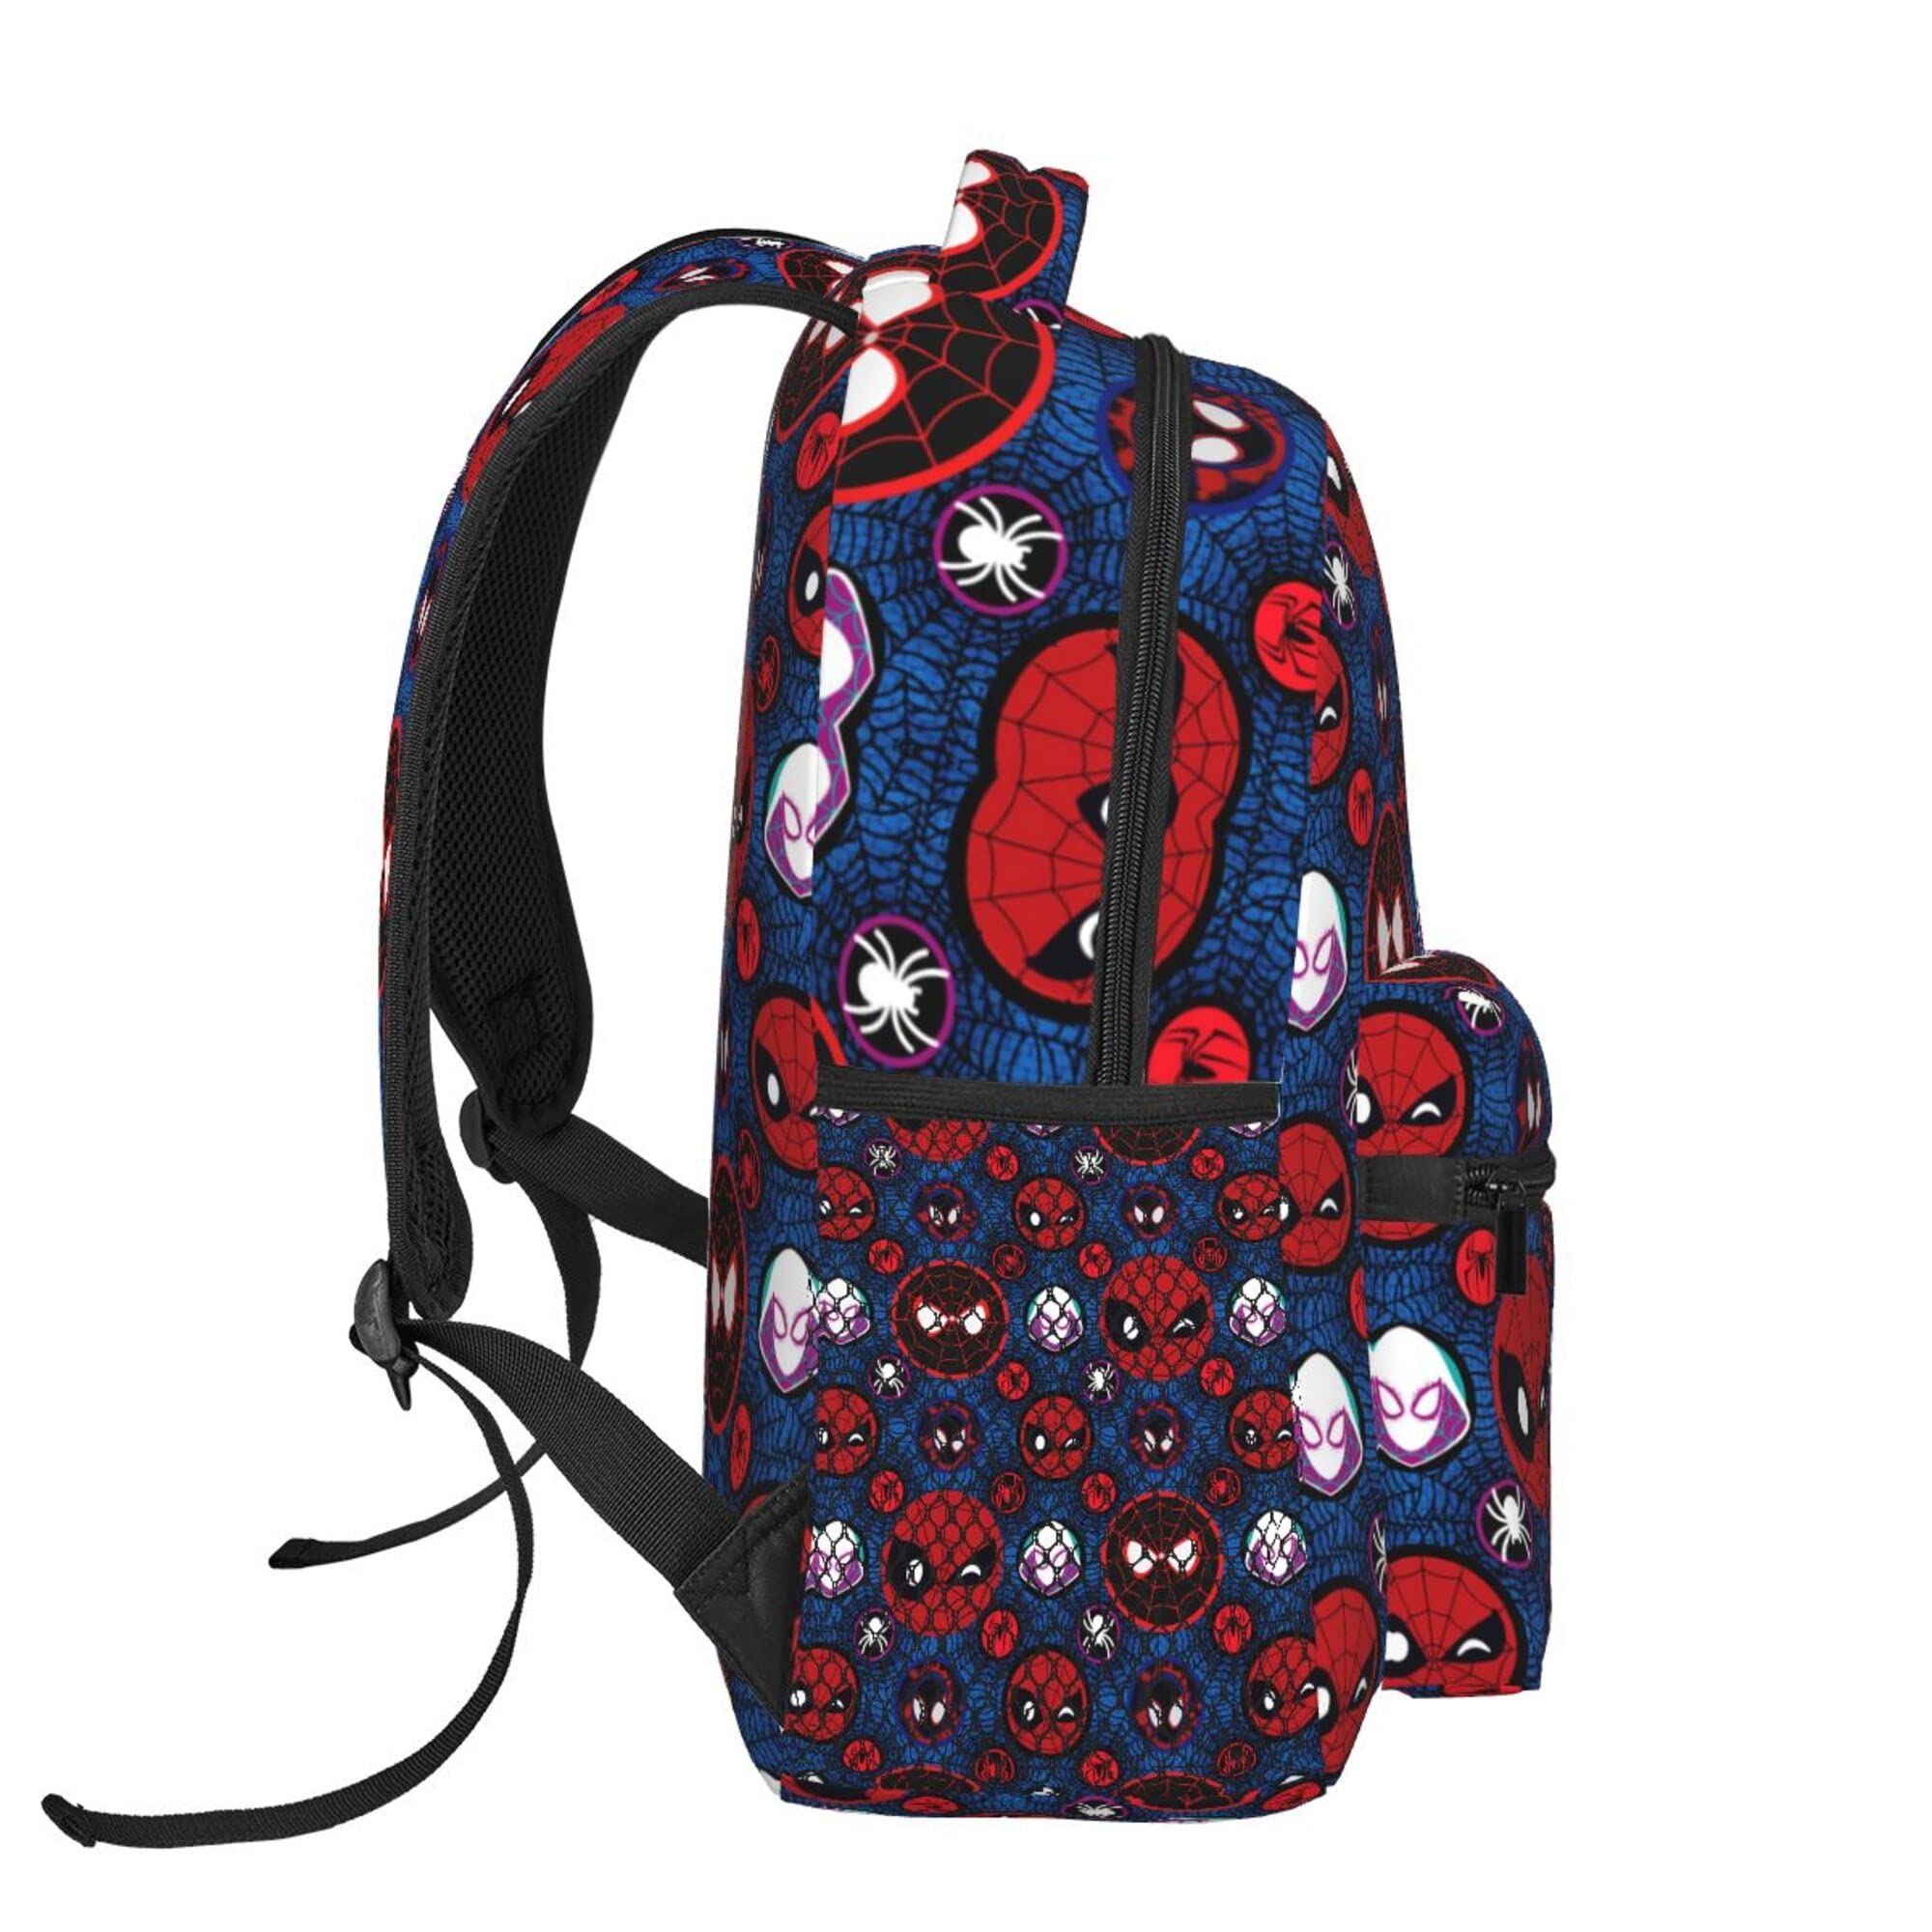 Megar Spider Backpack 15.6 Inch Backpacks Boys Superhero Bookbag Lightweight Casual Daypack Travel Bag (Red)